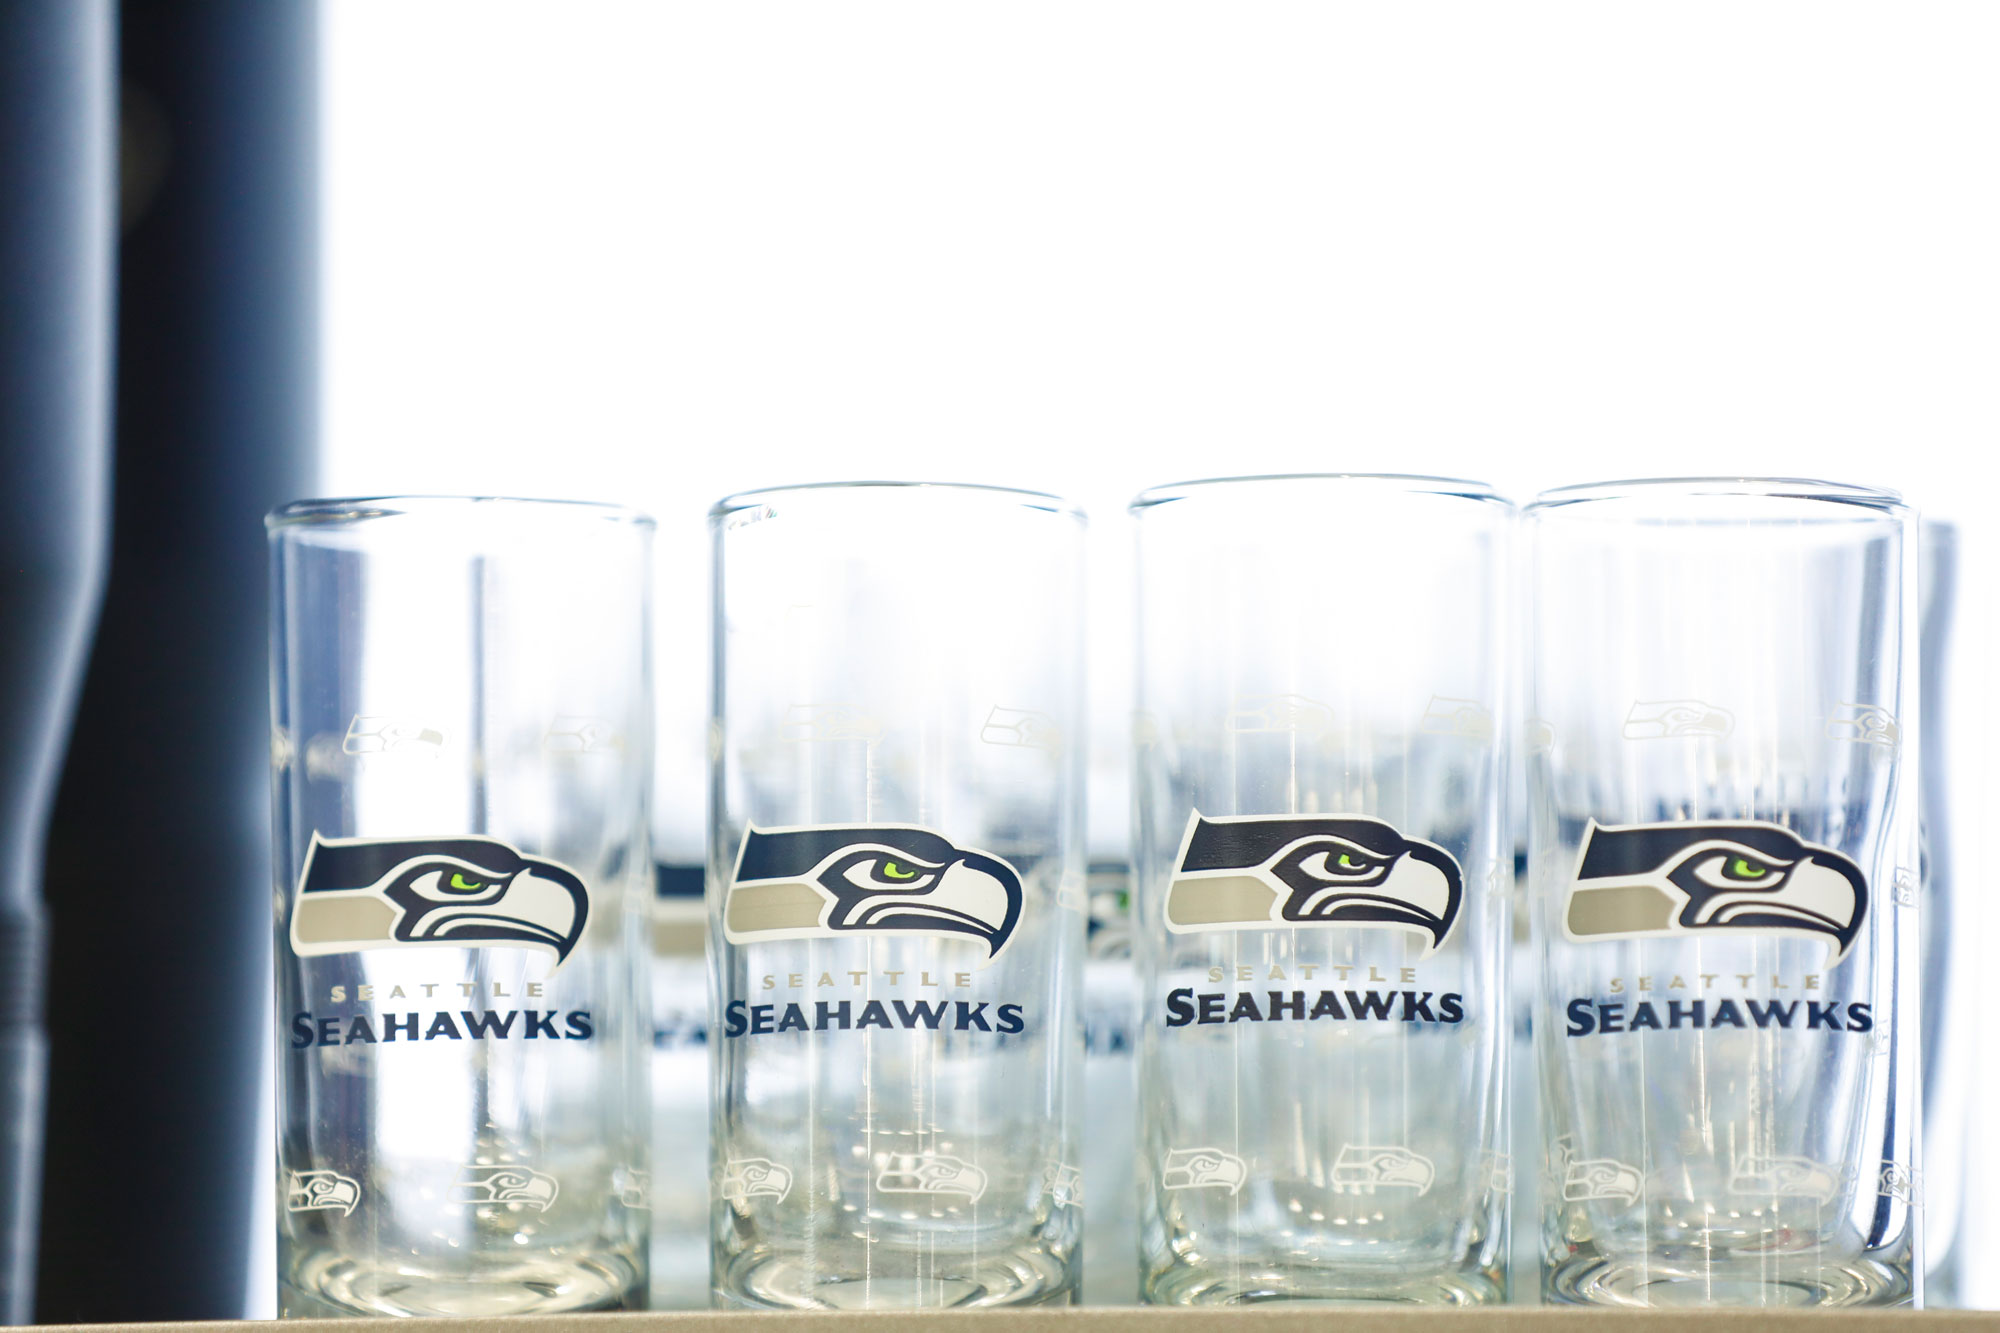 SEA Hudson Products (Seattle Seahawks glasses)